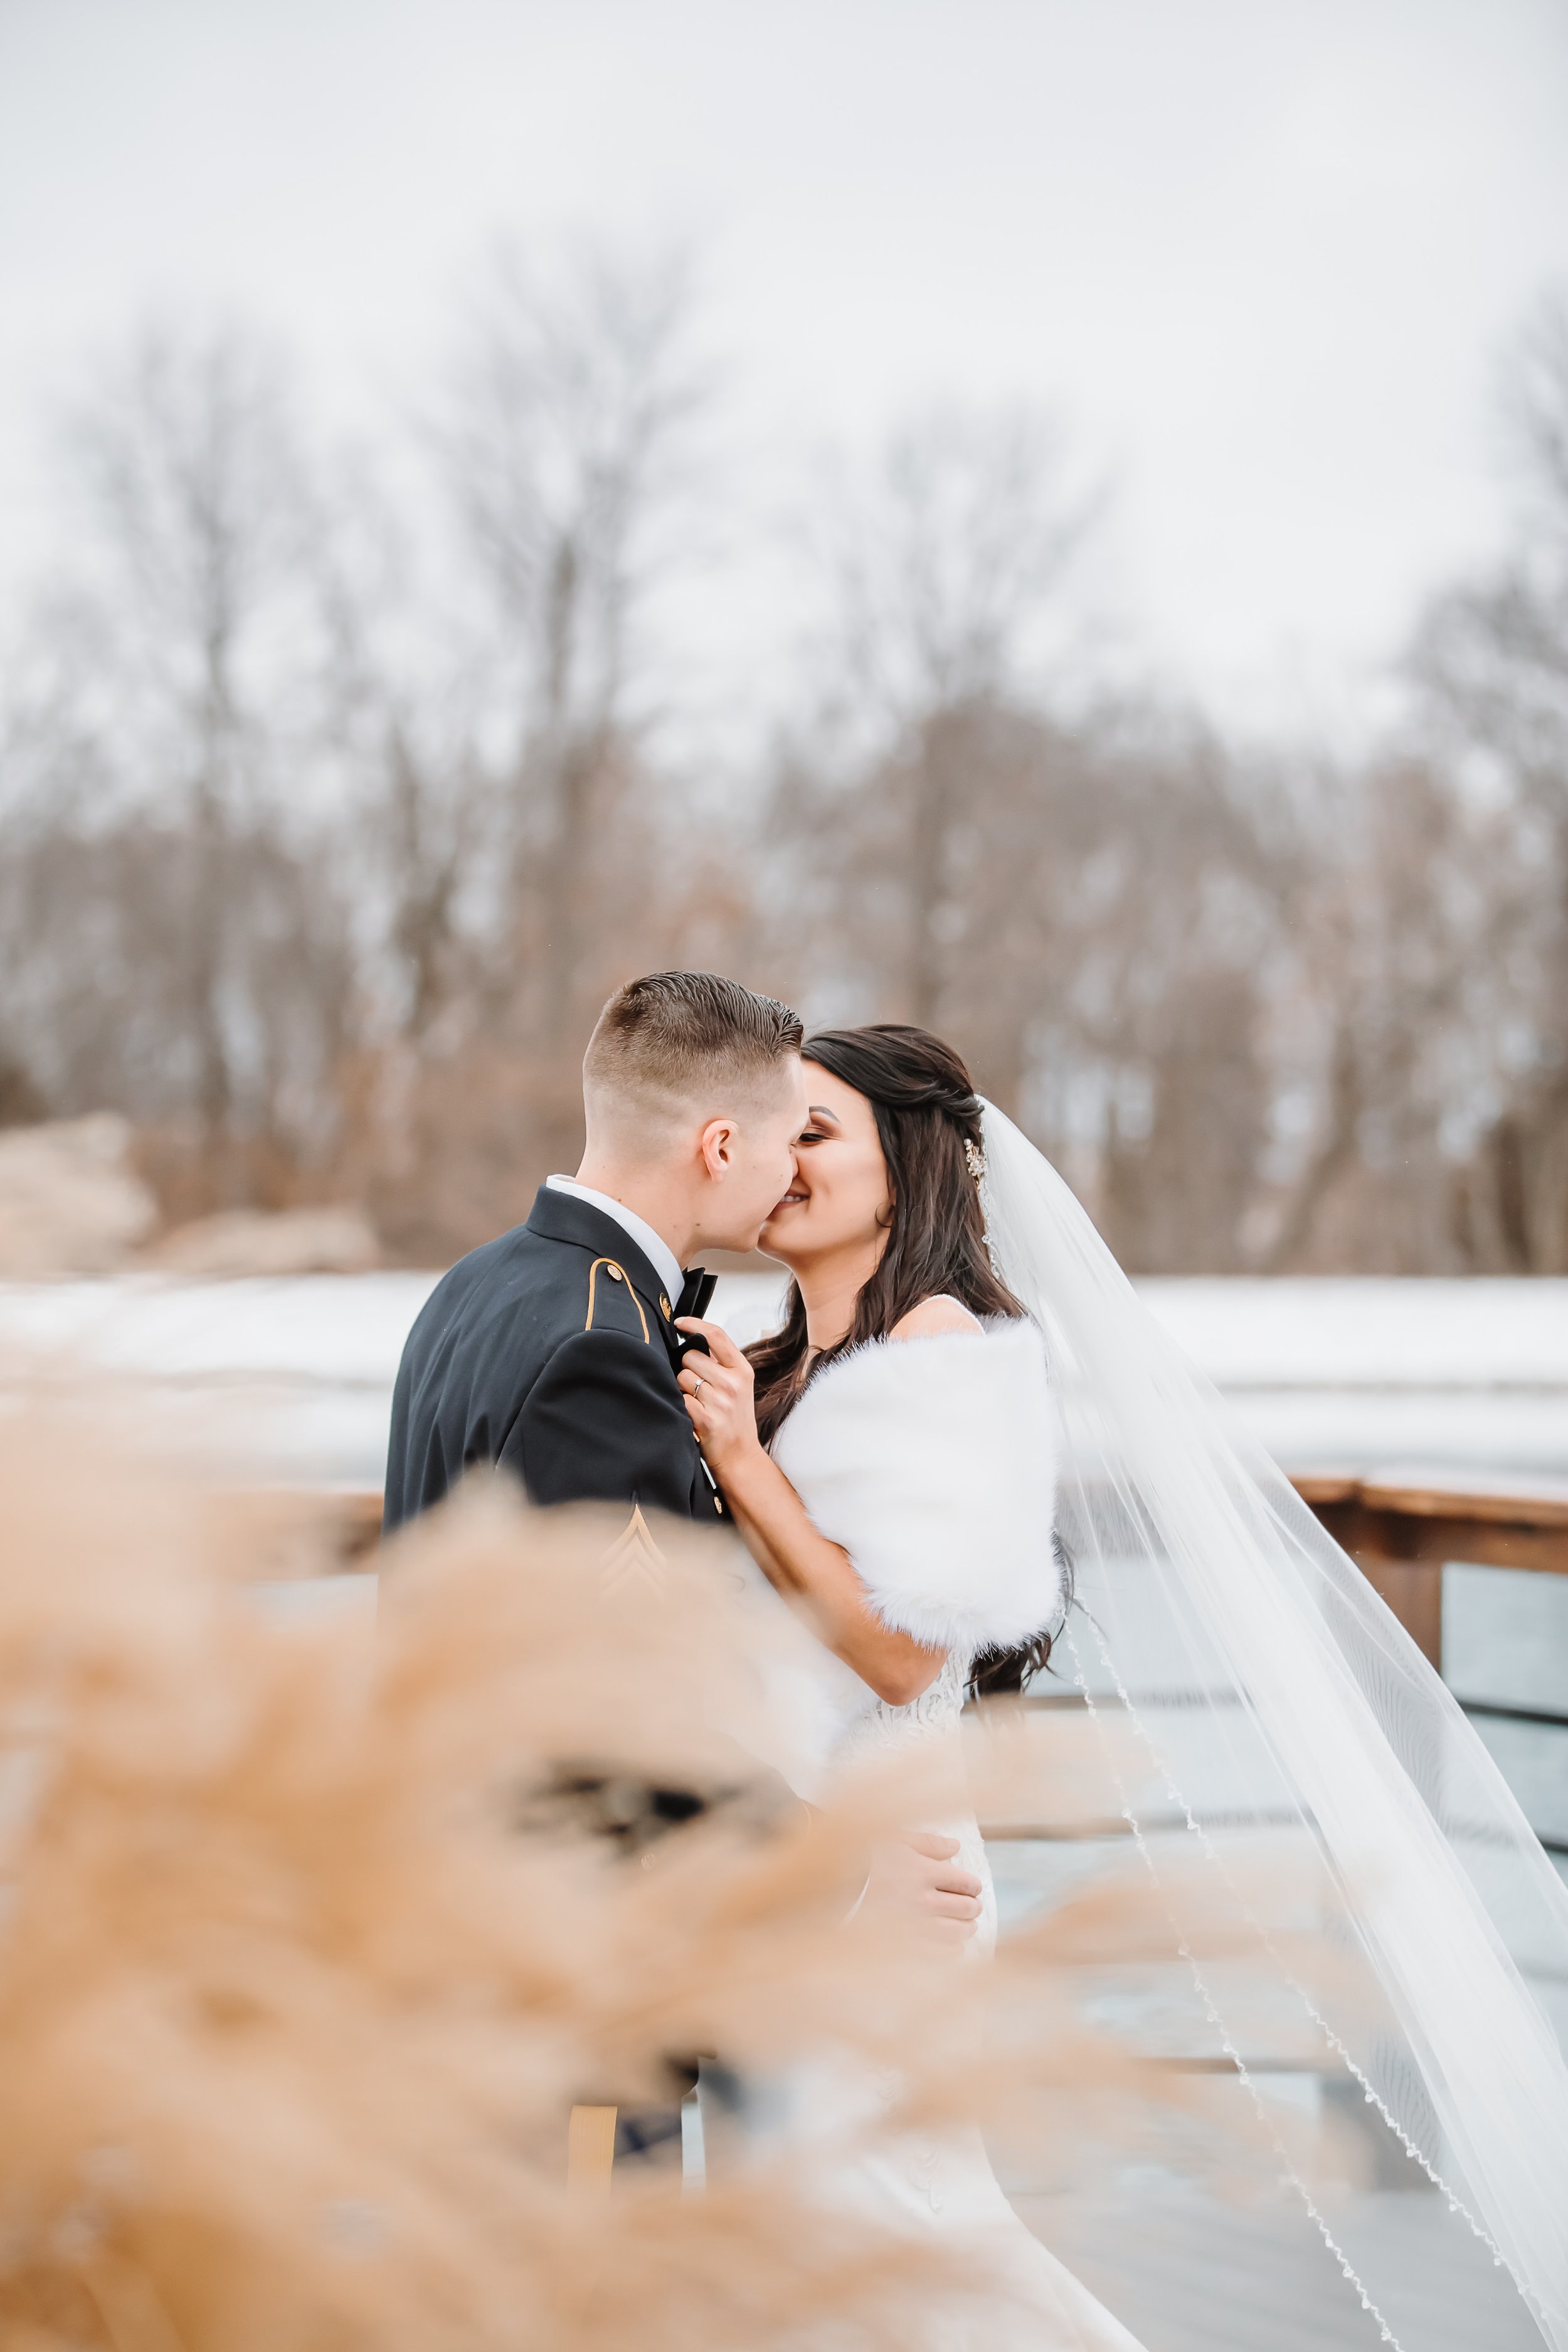 Winter Wedding Tips From a Real Winter Wonderland Wedding — Emerson Fields Wedding  Venue